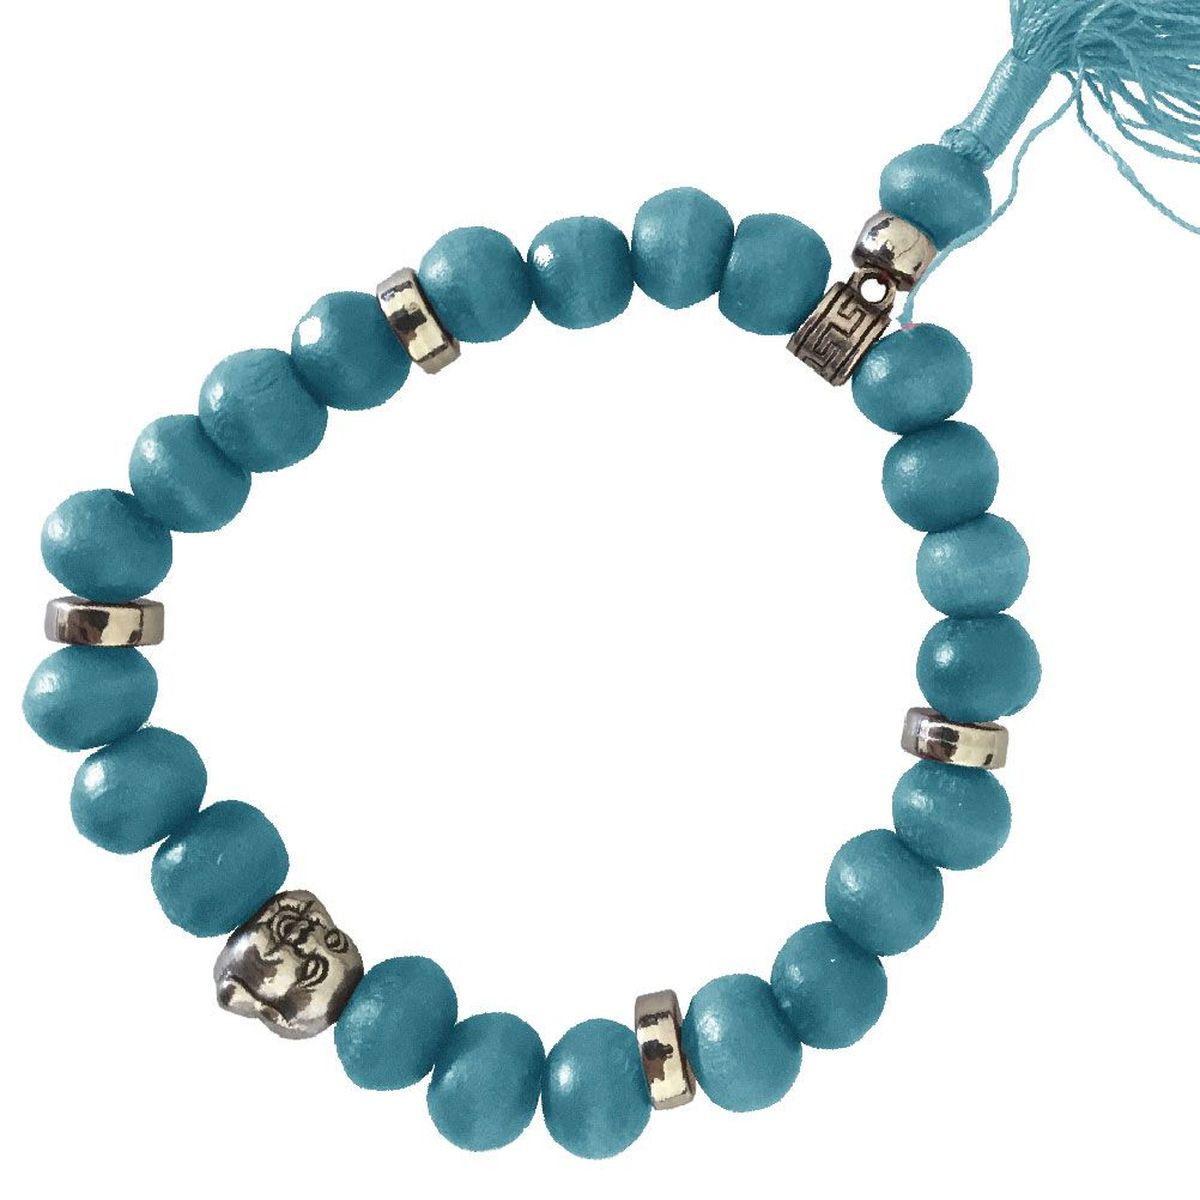 Buddhist Bracelet wooden beads - Blue